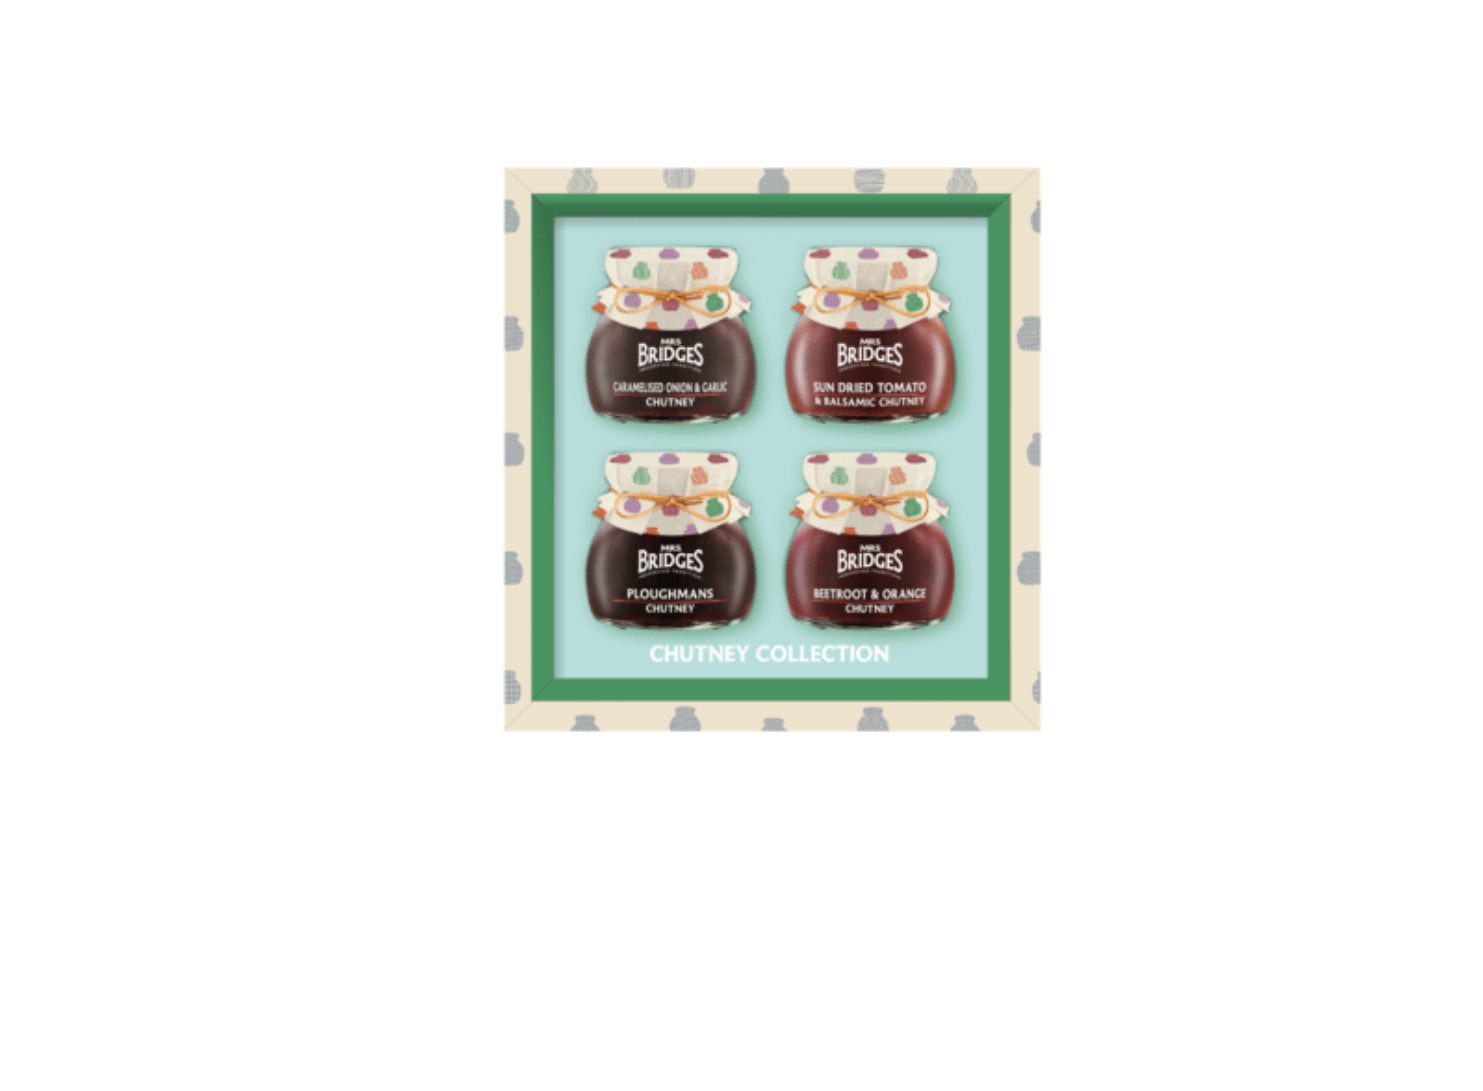 Mrs Bridges 4 Mini Chutney Gift Set